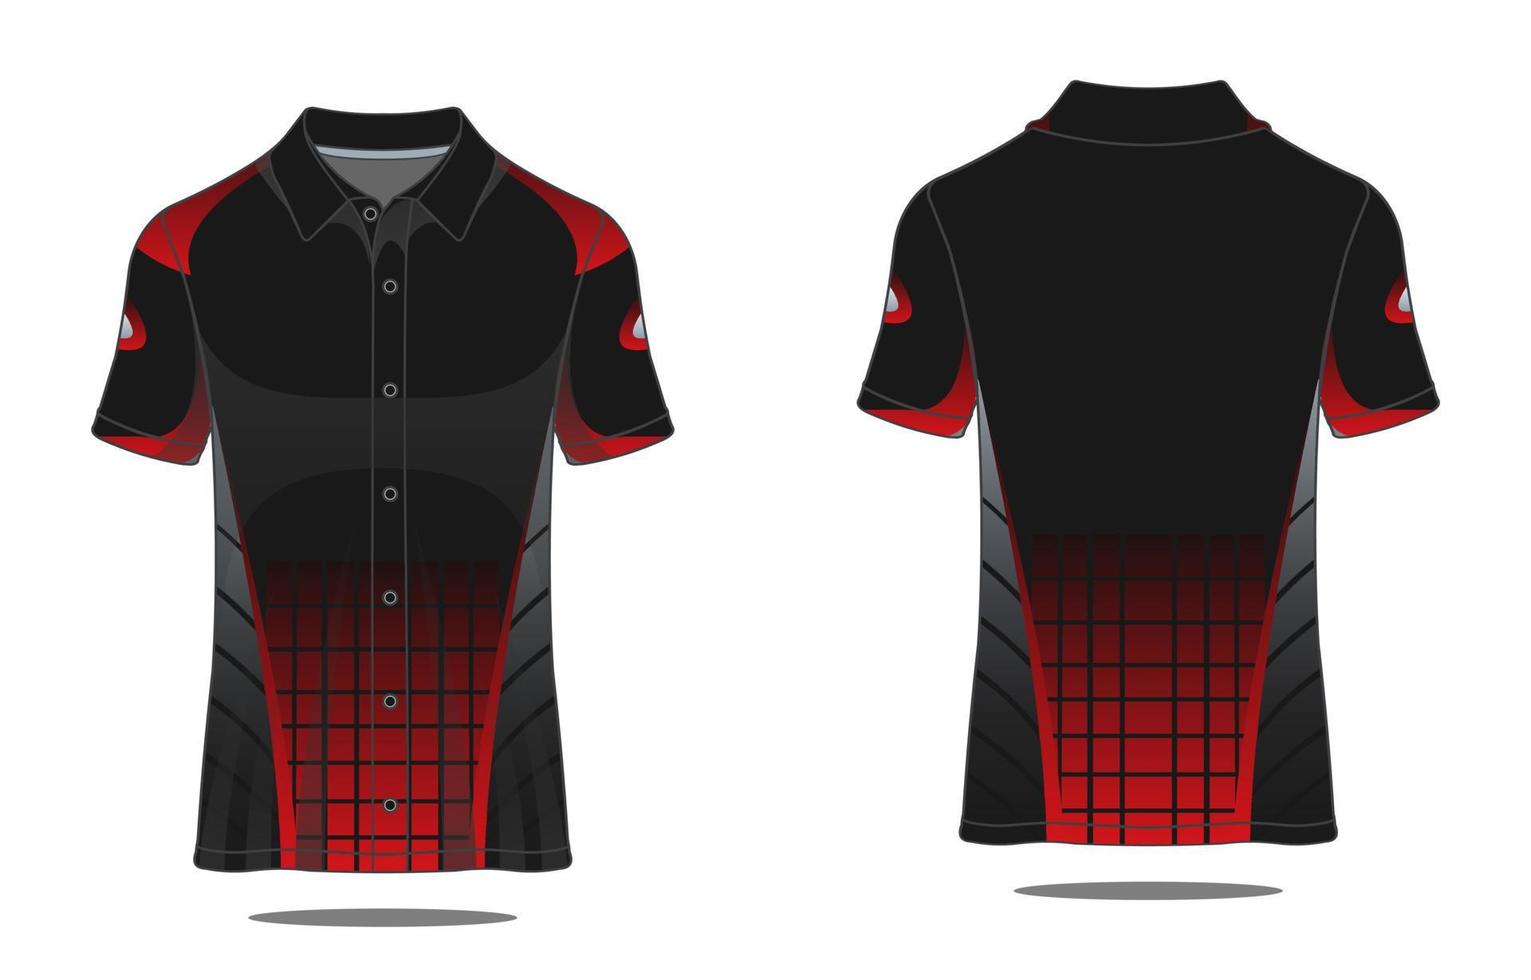 tshirt sports abstrac texture footbal design for racing soccer gaming motocross gaming cycling vector